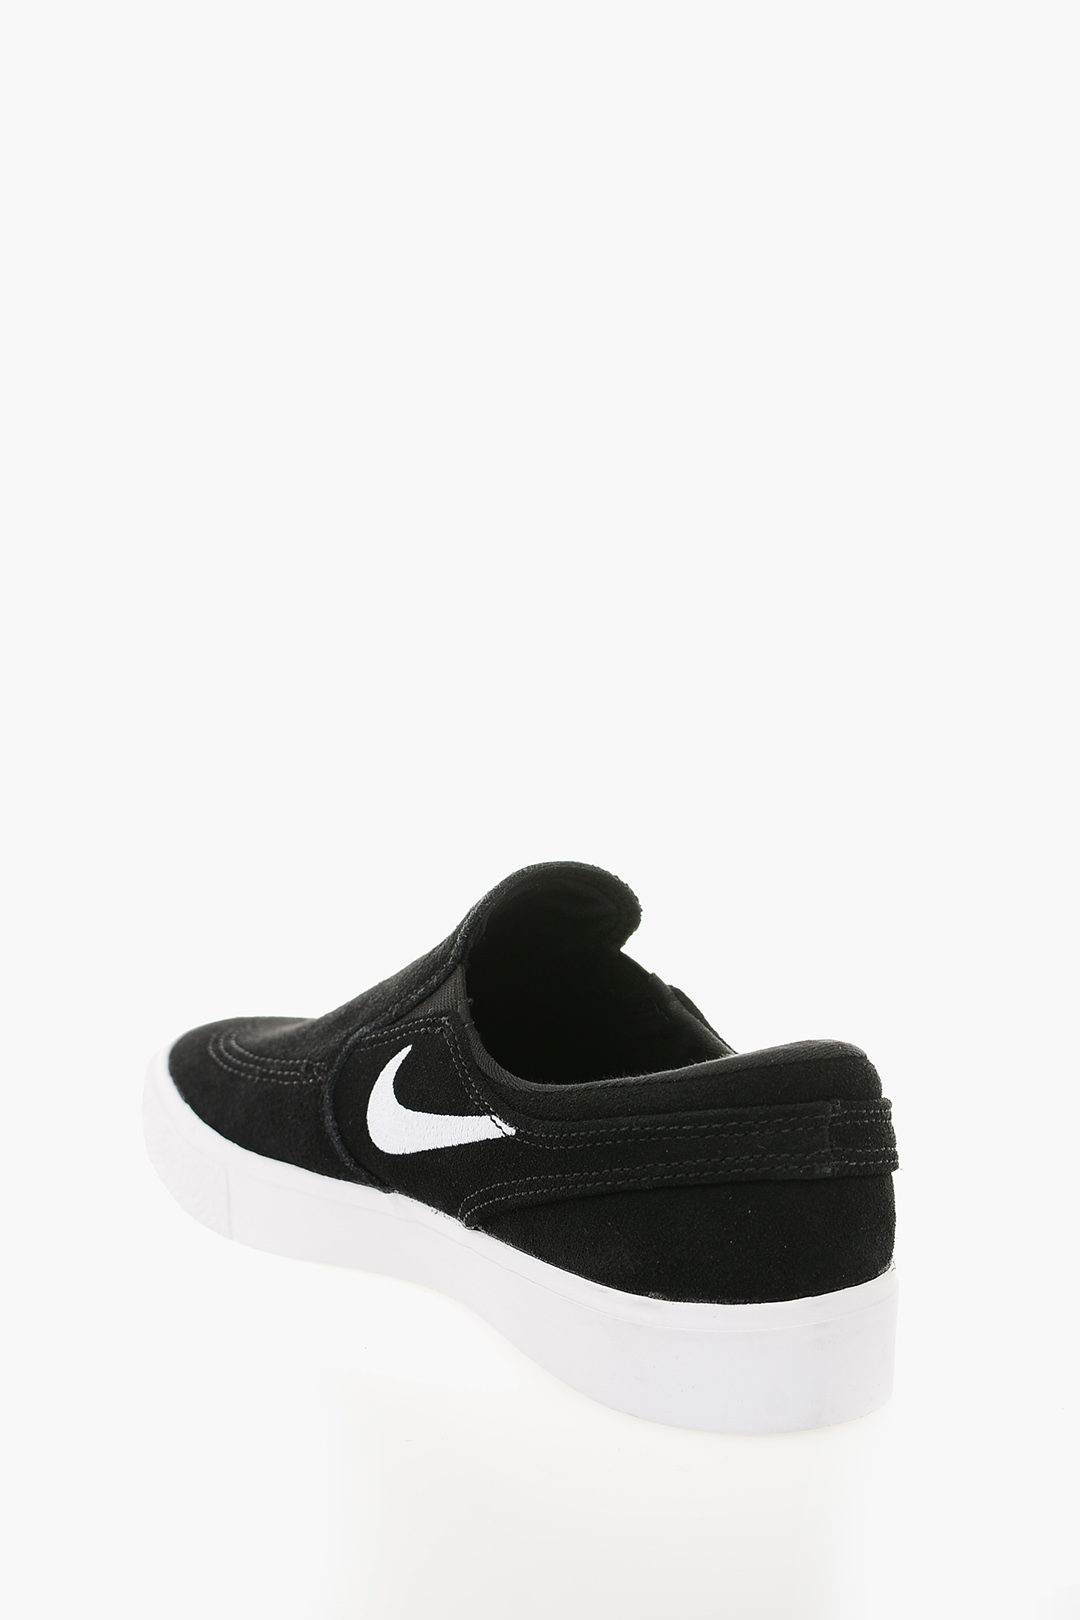 mug zone Subjectief Nike suede NIKE SB ZOOM JANOSKI SLIP RM Slip on sneakers women - Glamood  Outlet